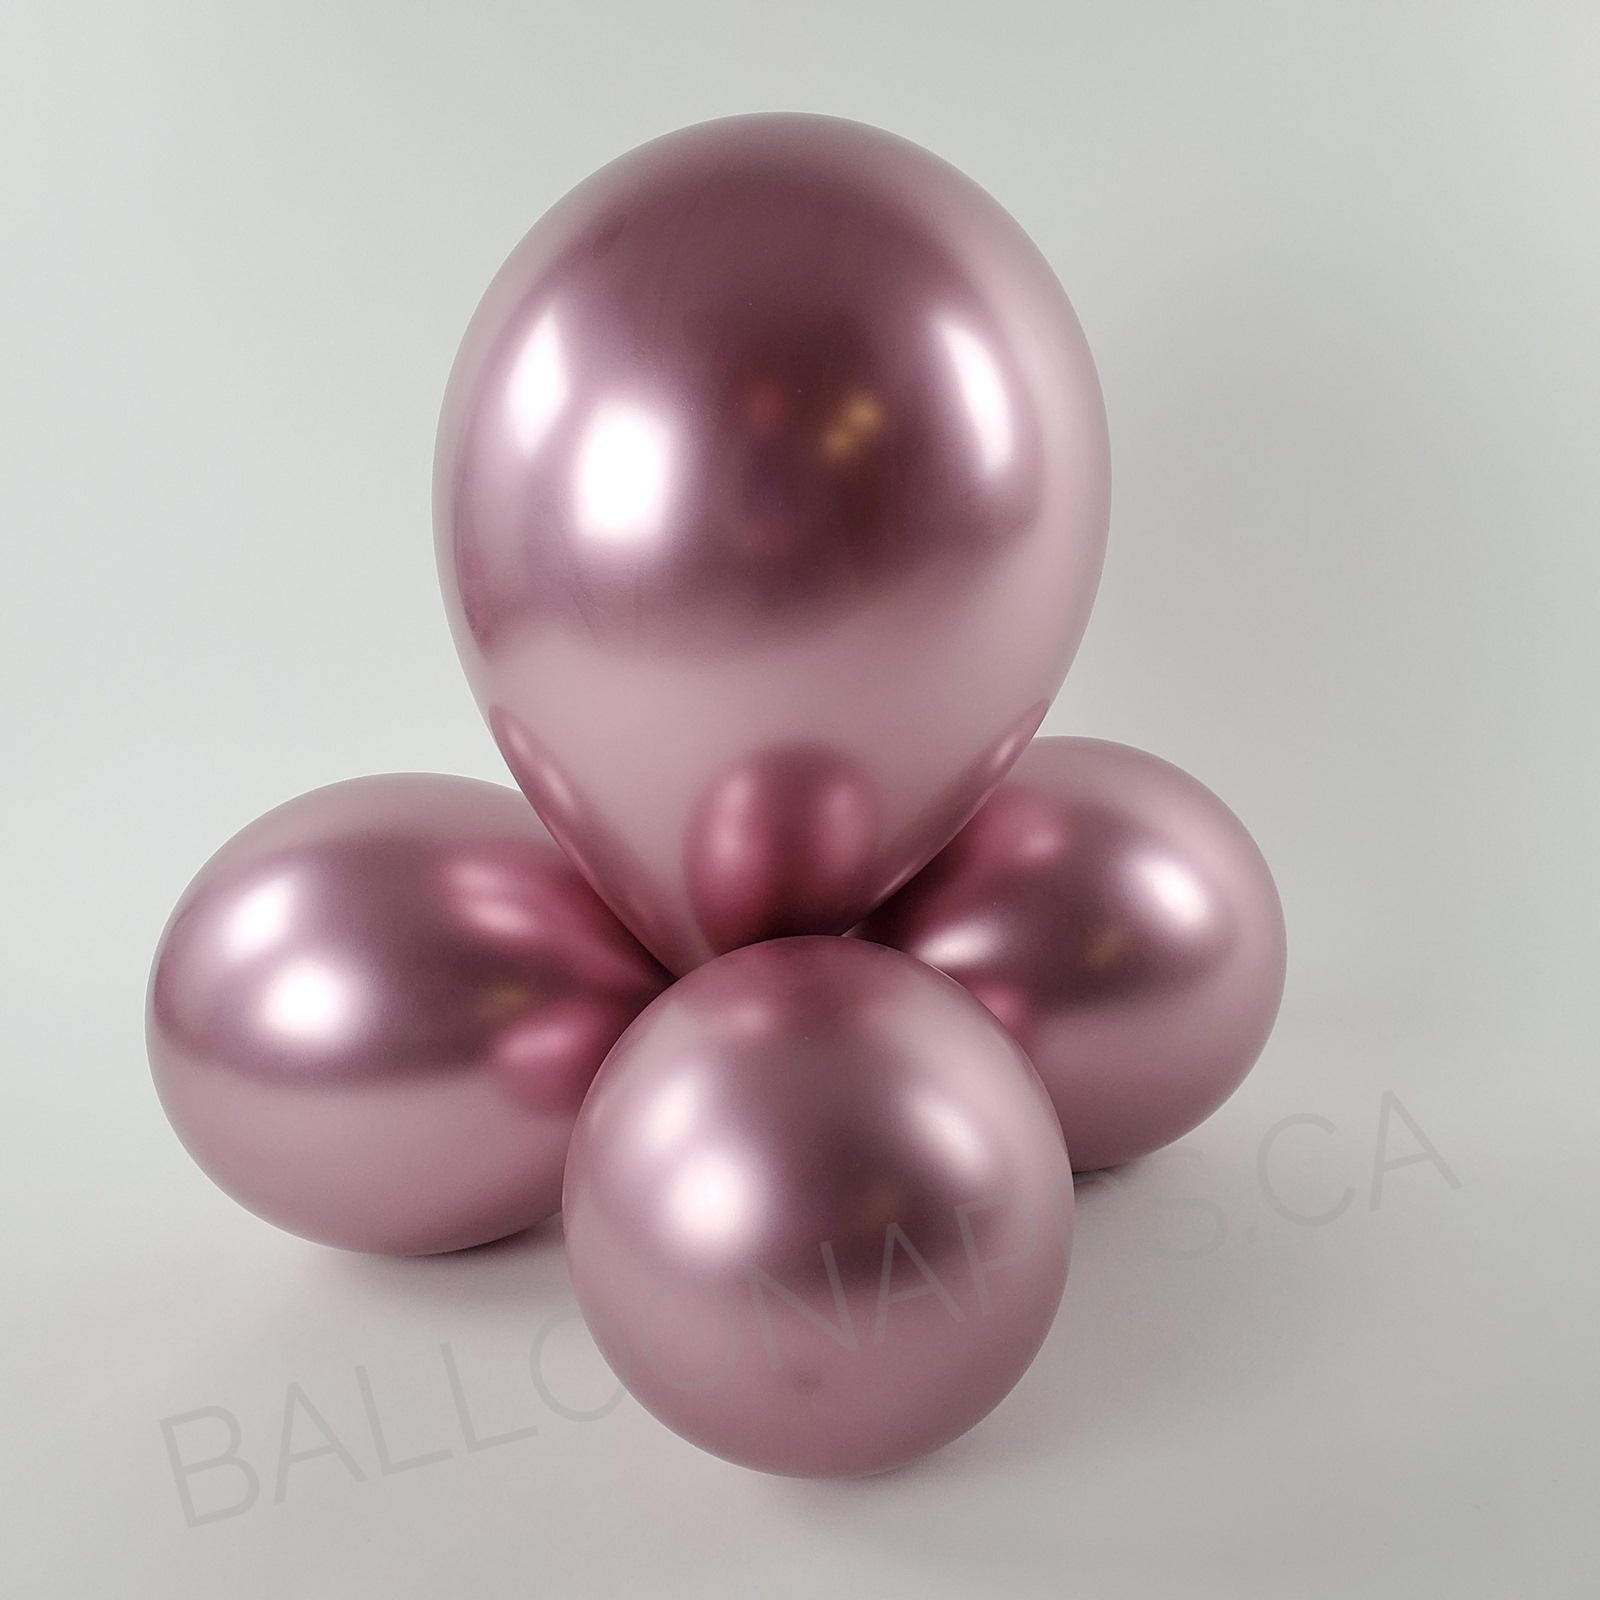 balloon texture Q (100) 260 Chrome Mauve balloons